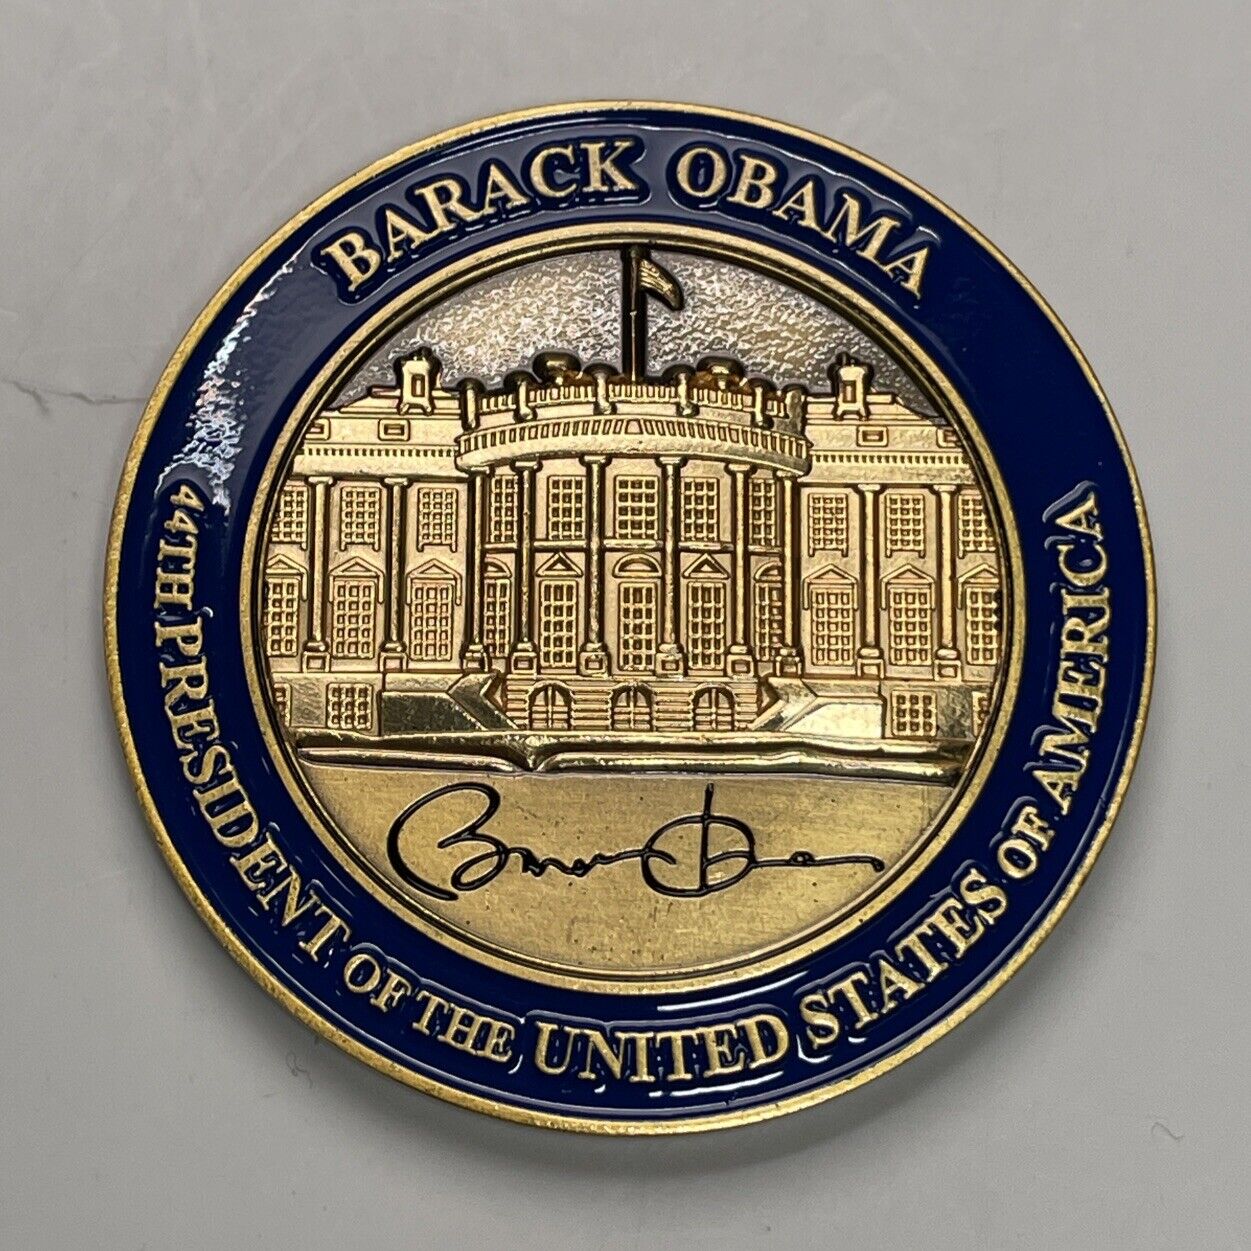 Barack Obama 44th President of USA Challenge Coin POTUS Seal of the President